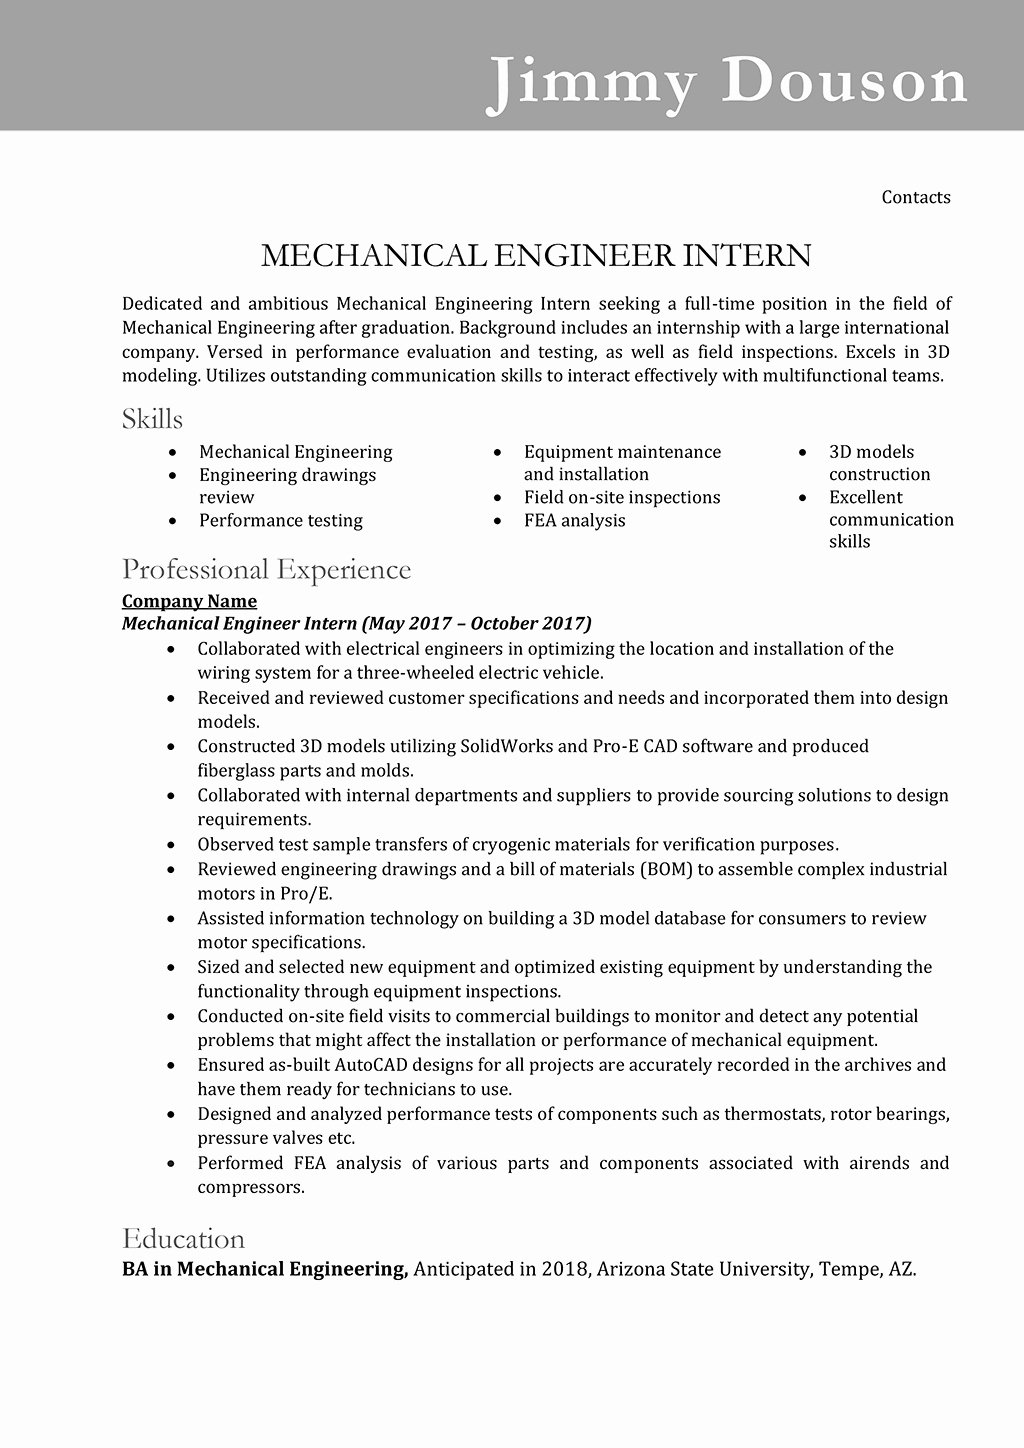 Mechanical Engineer Resume Sample Unique Mechanical Engineer Resume Samples and Writing Guide